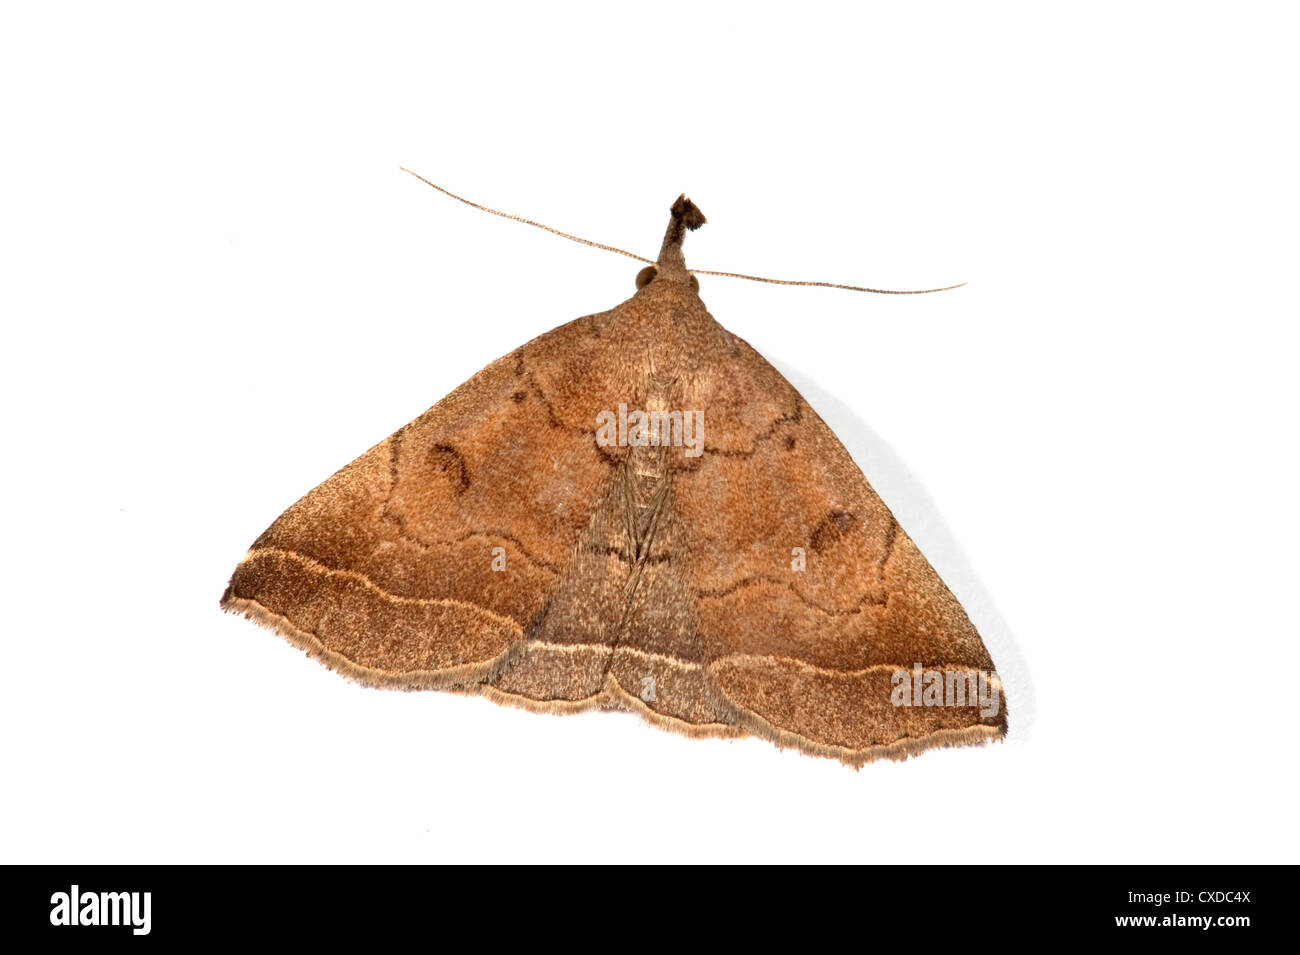 The Snout Moth, Hypena proboscidalis, UK Stock Photo